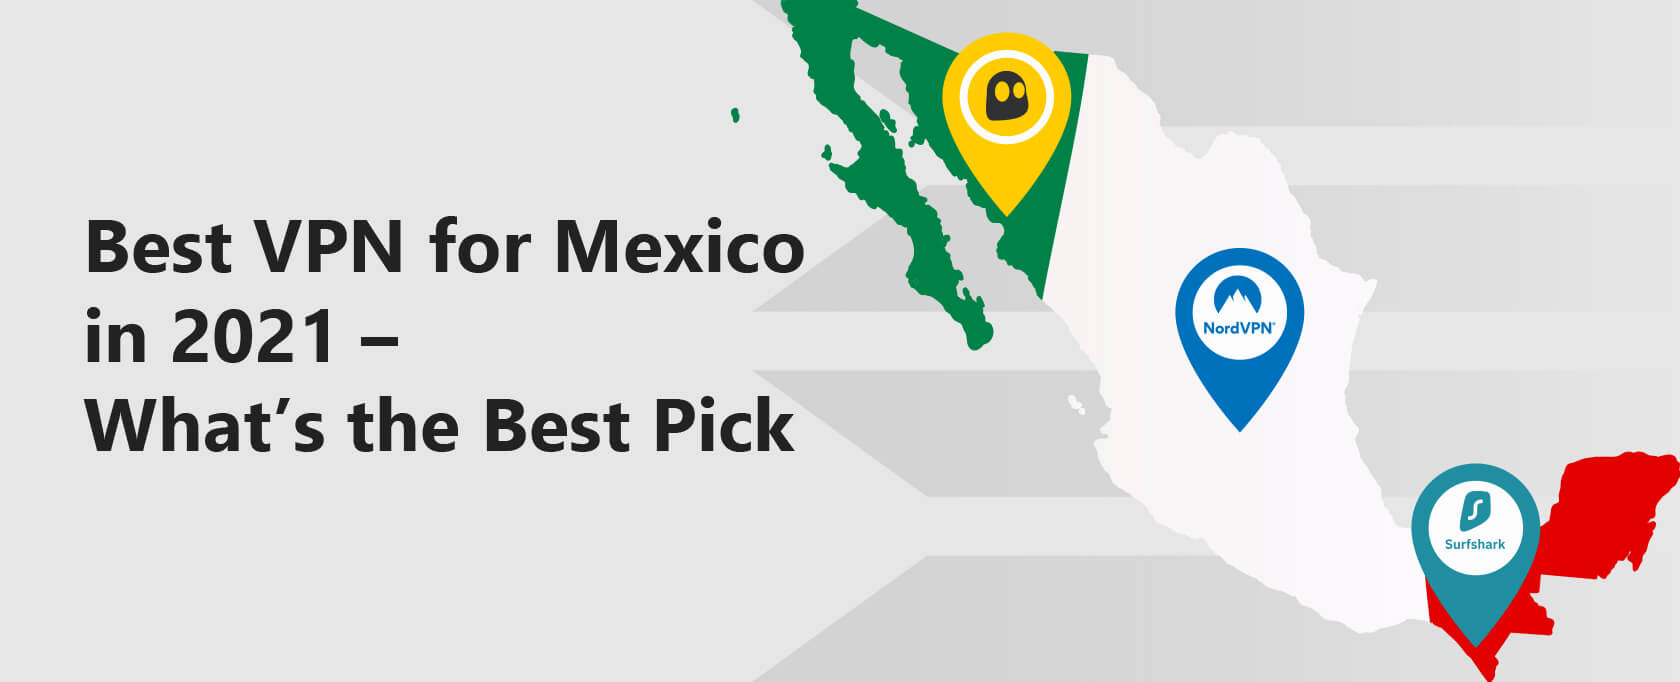 Mexico VPN